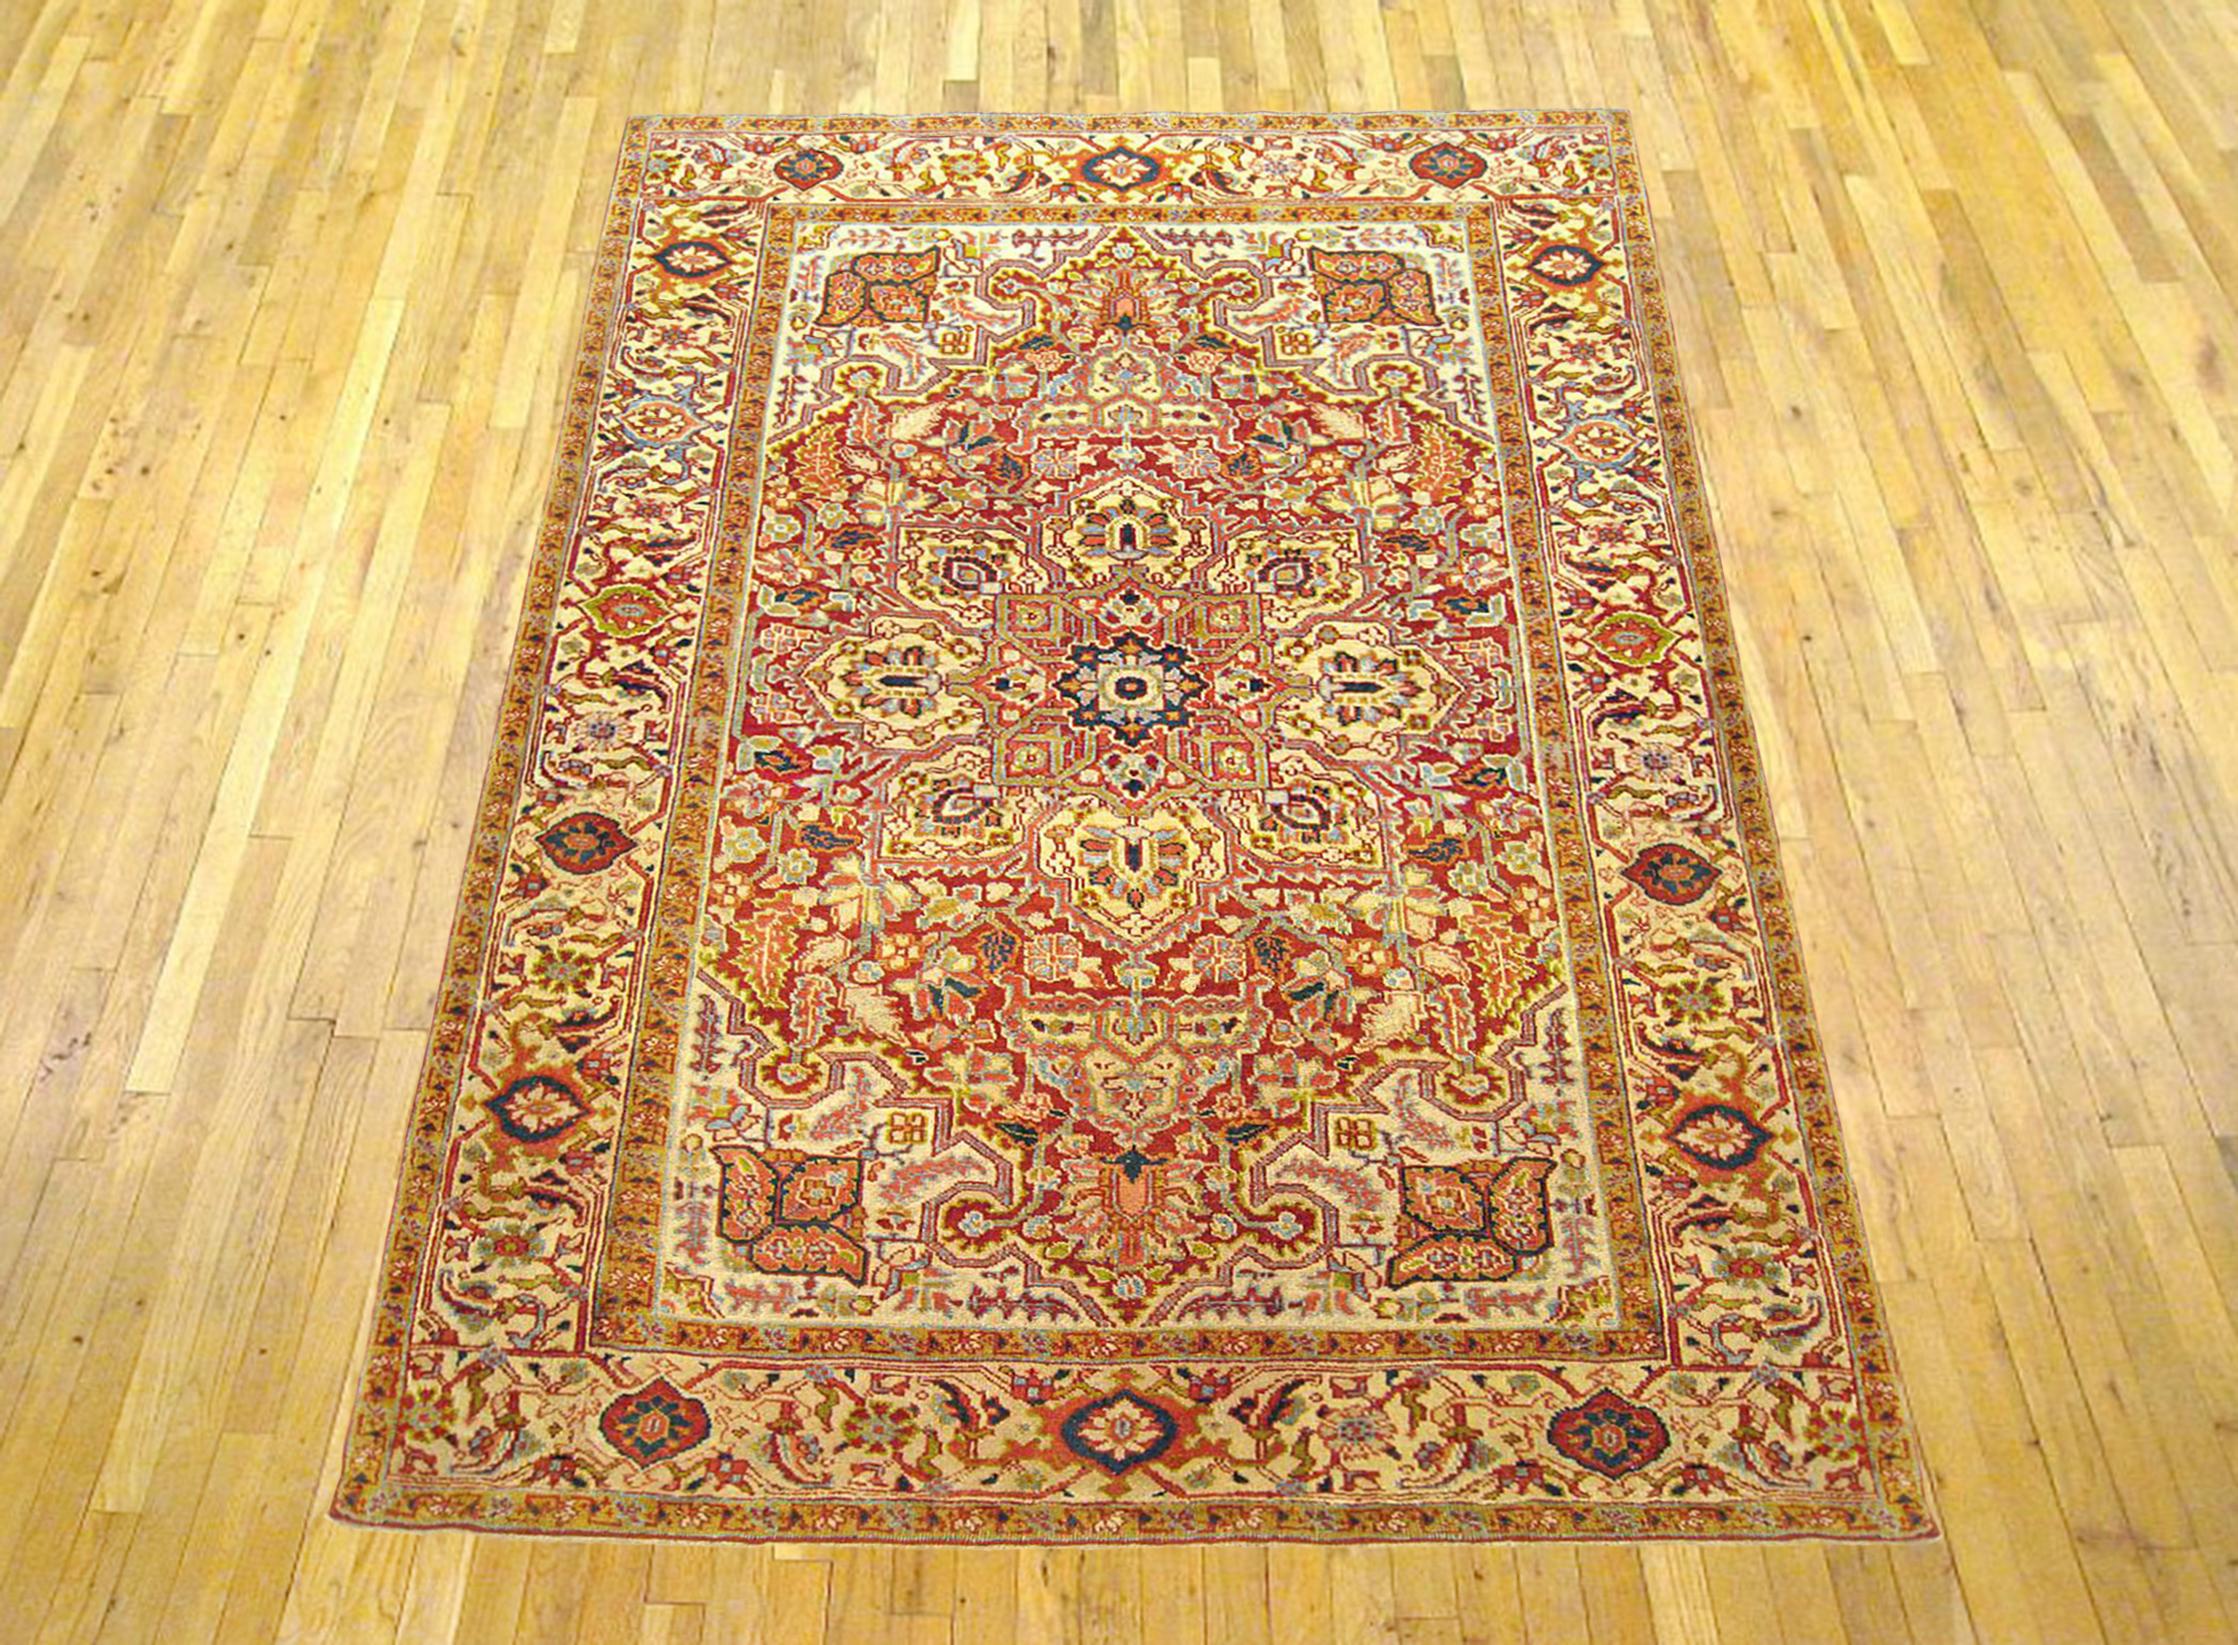 Vintage Persian Heriz oriental rug, small size

A vintage Persian Heriz oriental rug, size 7'5